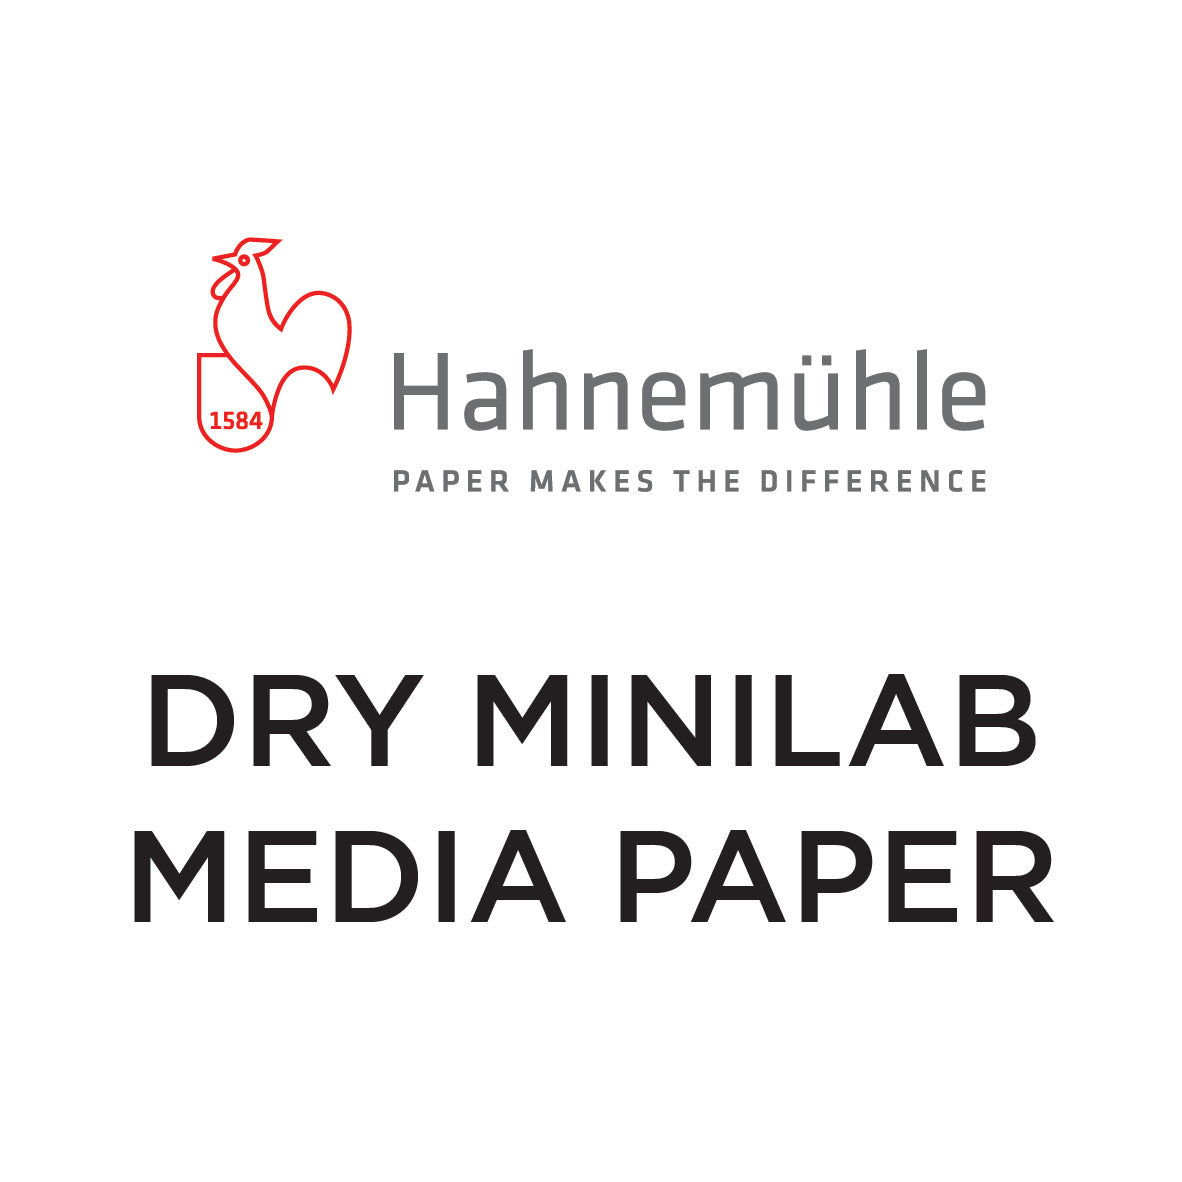 Hahnemühle Dry Minilab Media Paper